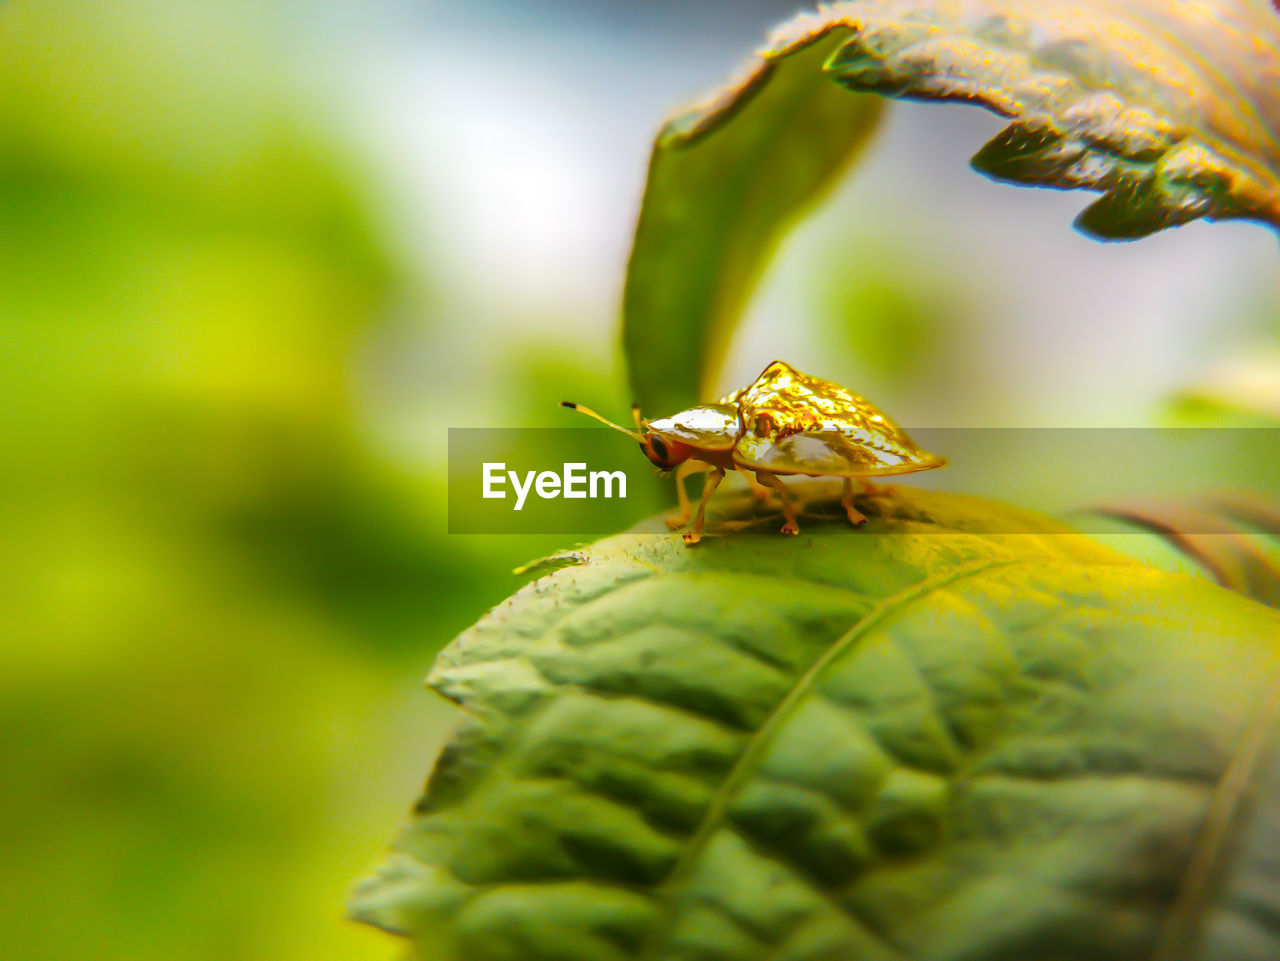 Ladybug of gold perched on a leaf